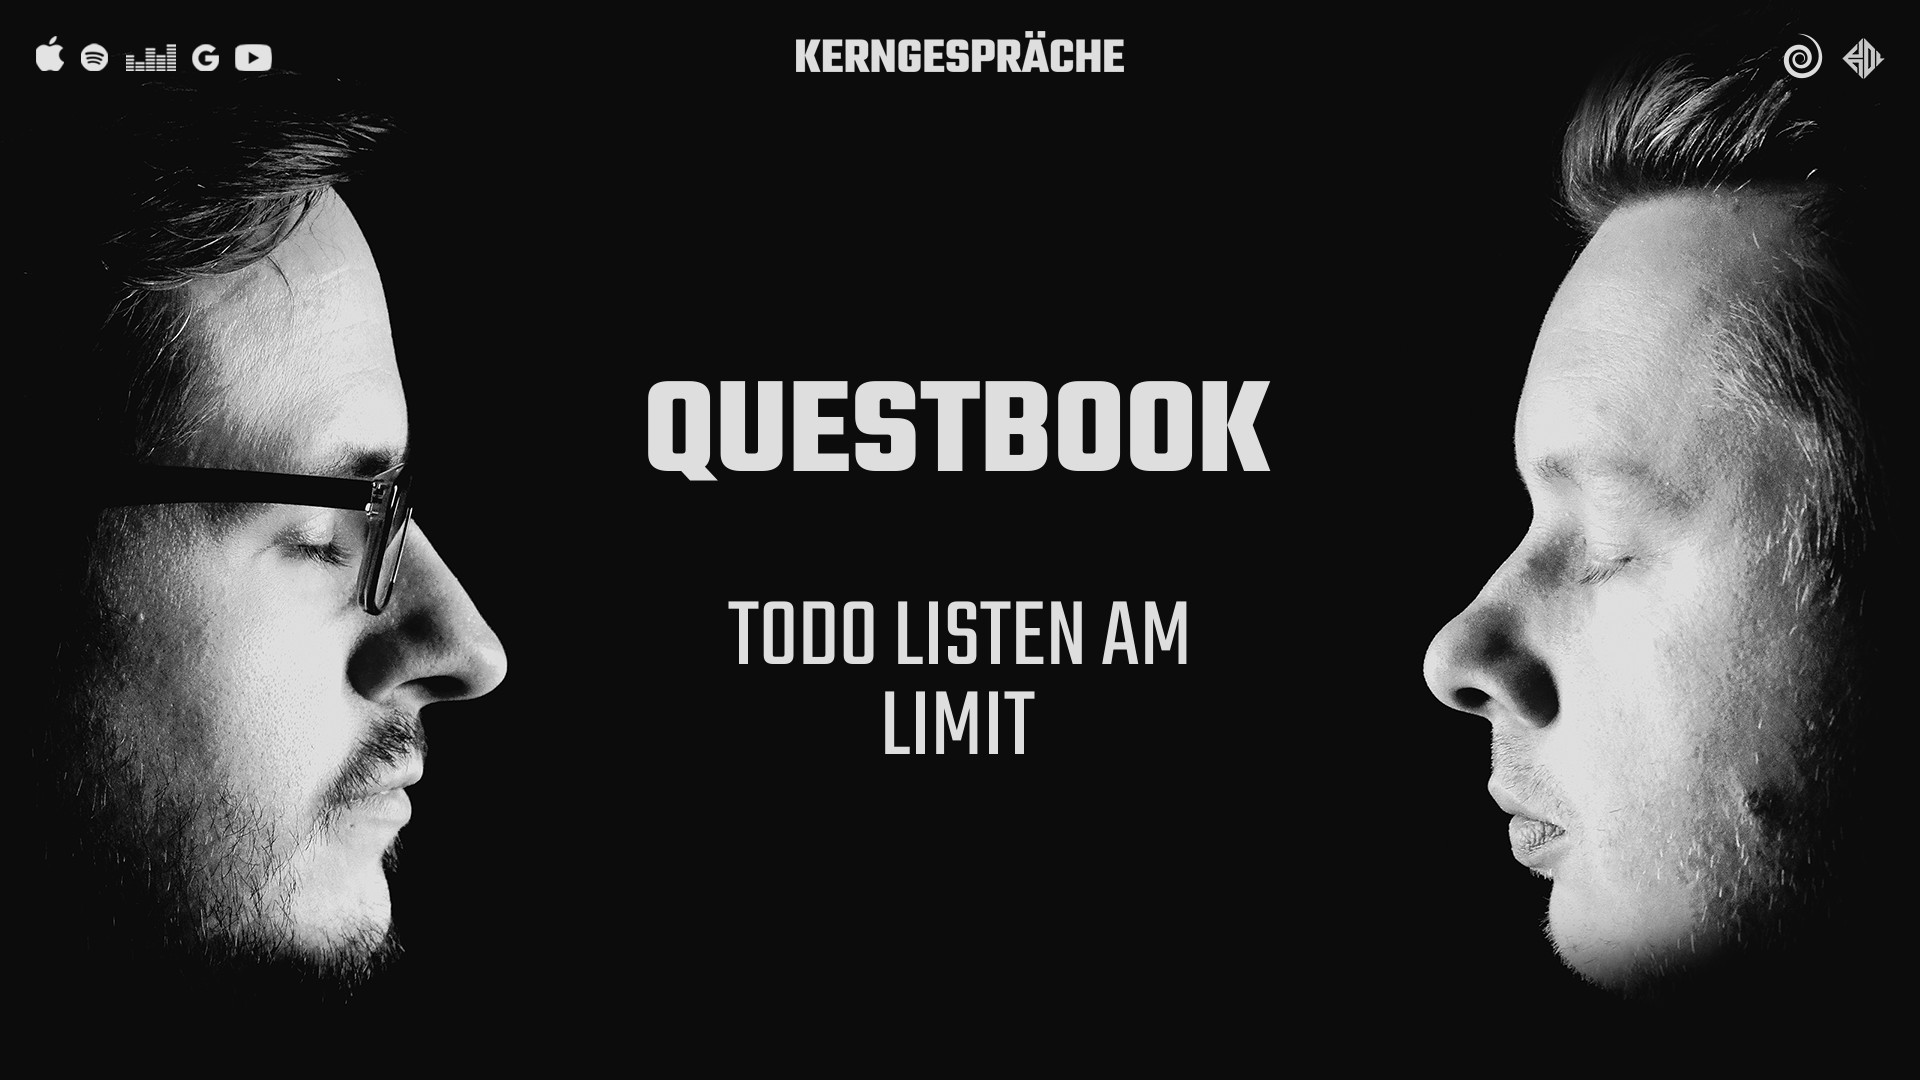 Questbook: Todo Listen am Limit